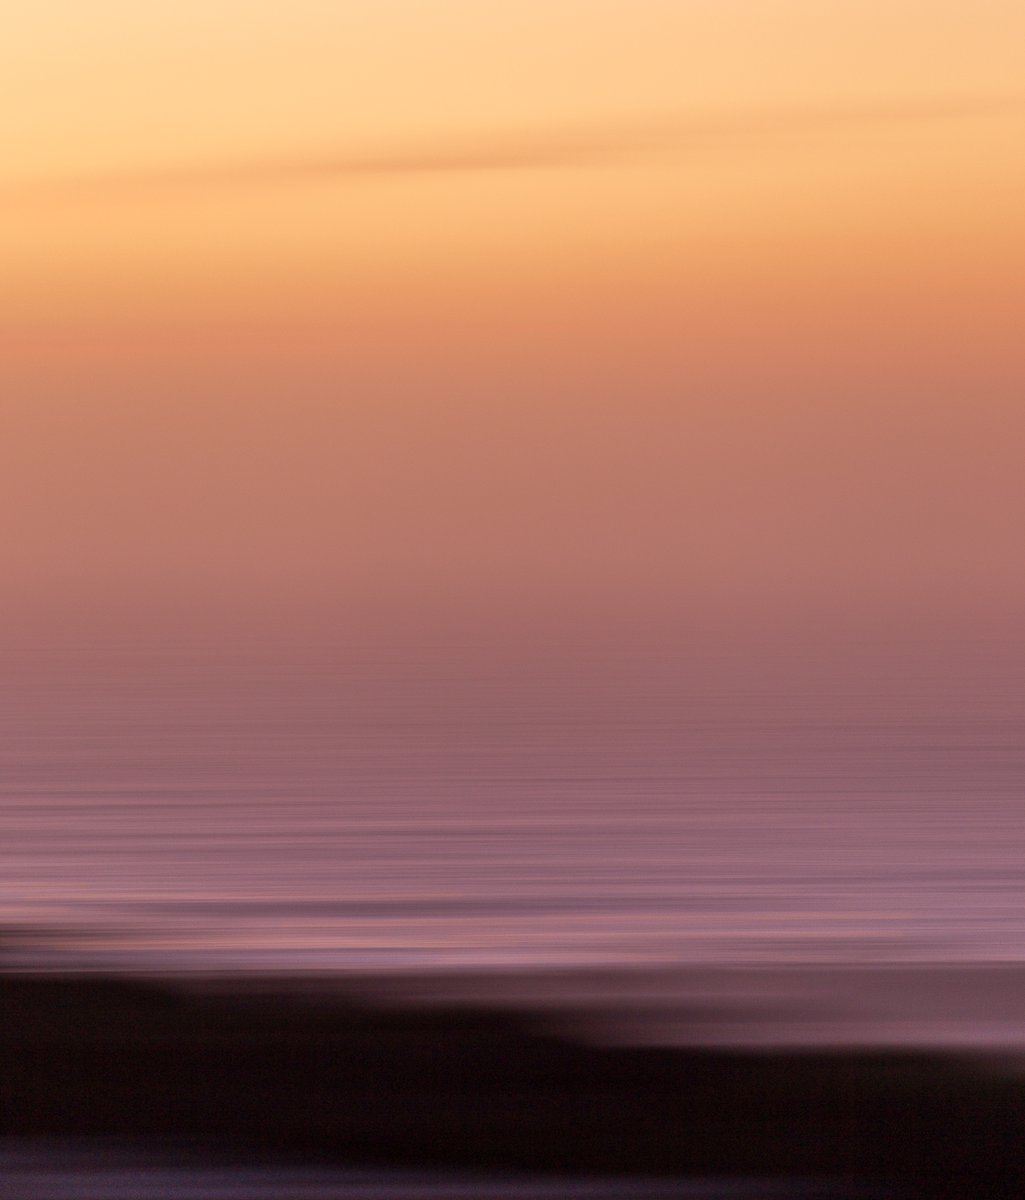 Sea Mist at Sunrise

#icmphotography